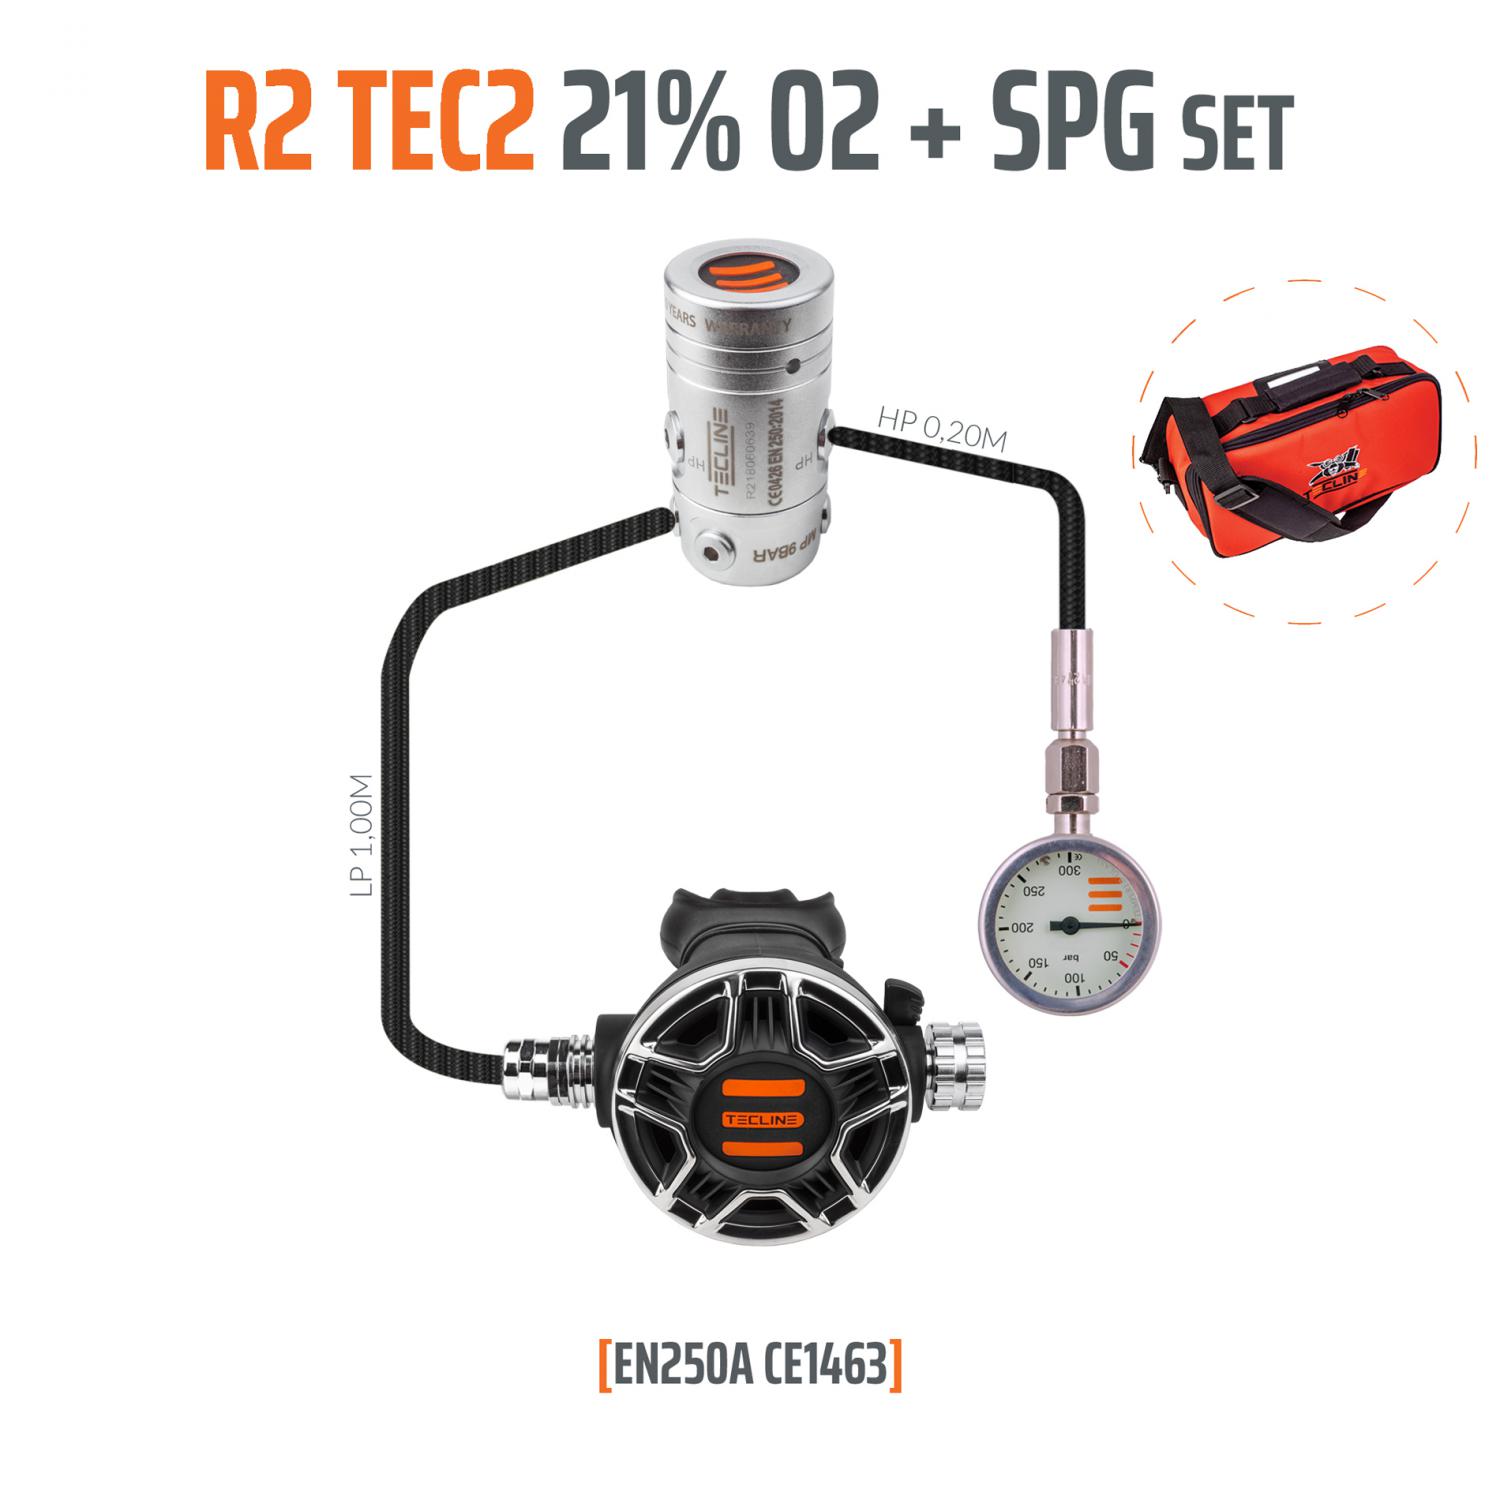 Tecline Regulátor R2 Tec2 21% O2 G5/8